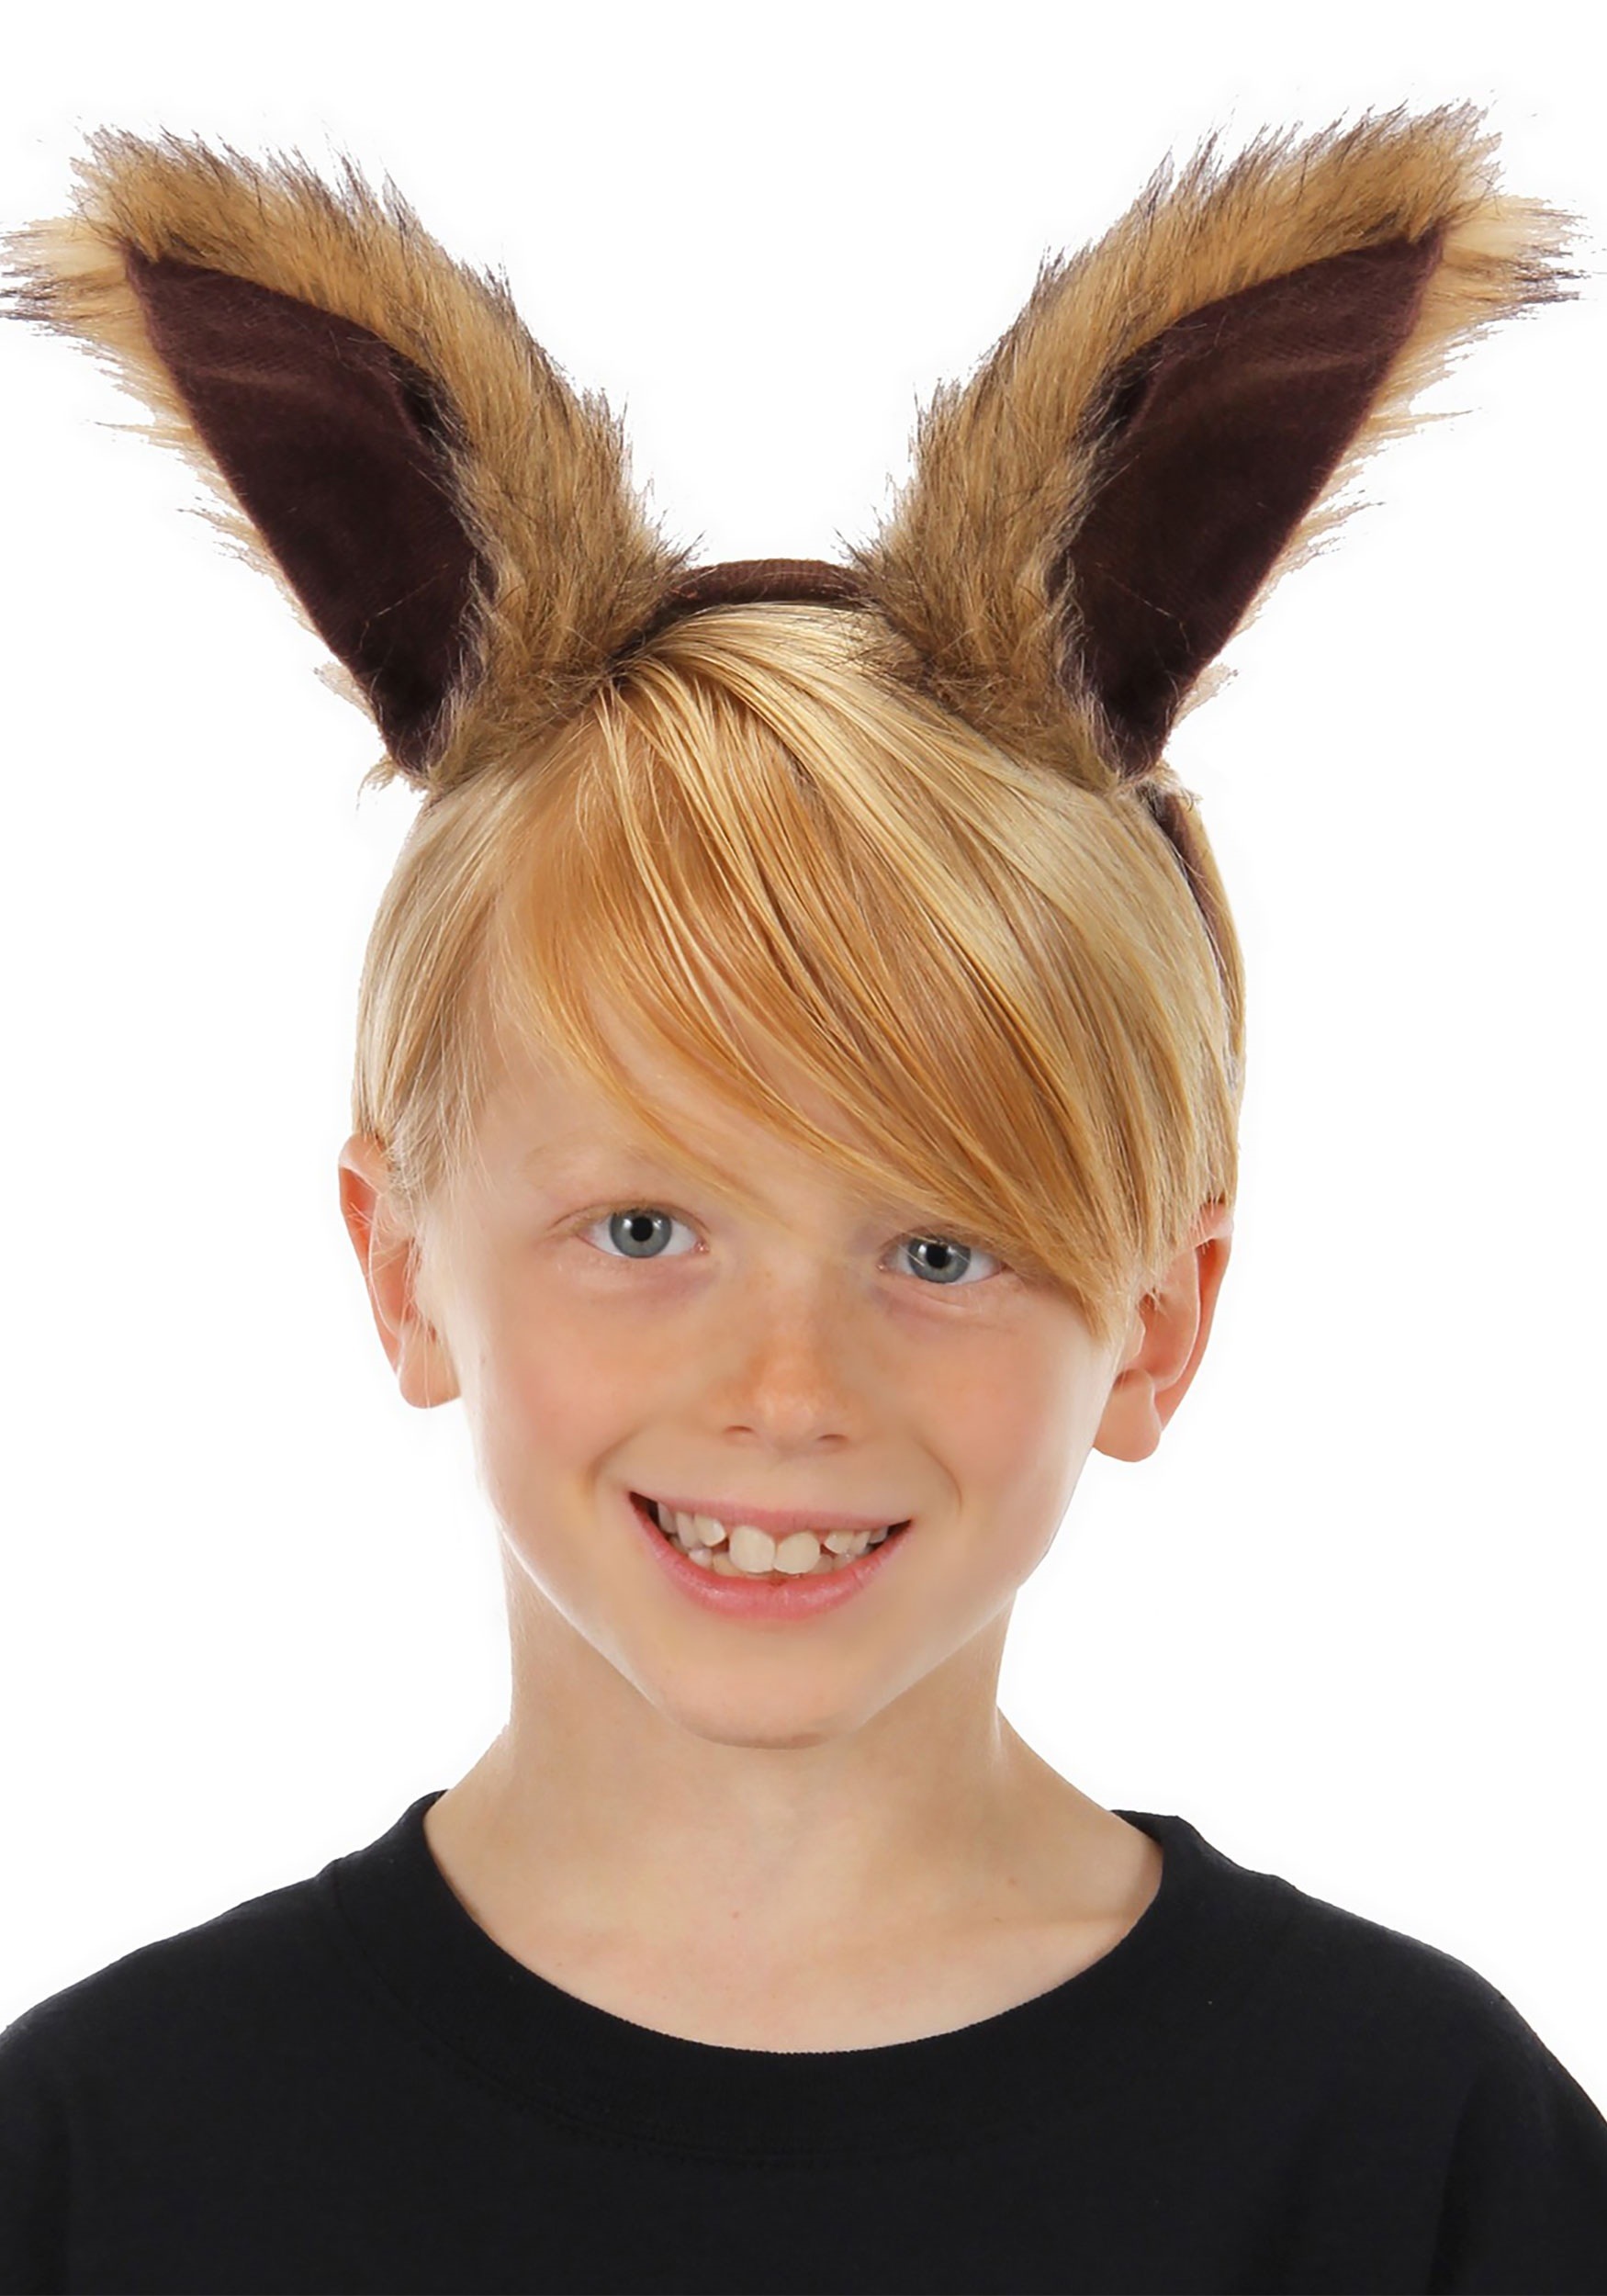 Deluxe Squirrel Ears Headband Accessory